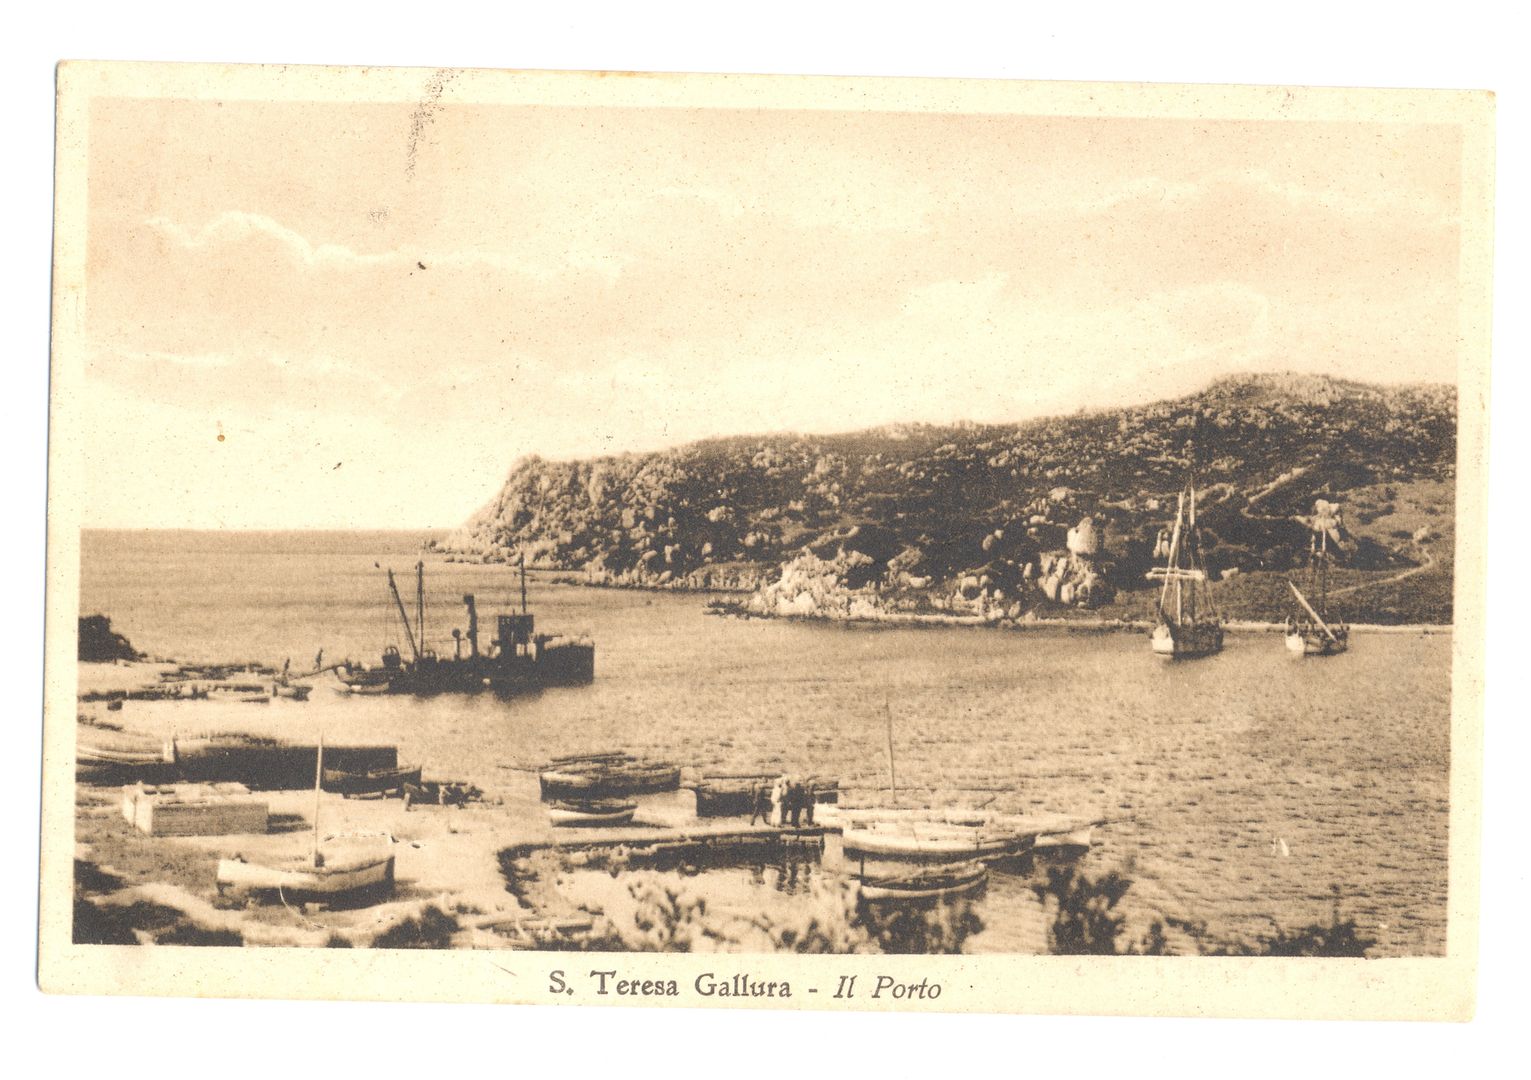 coll. Historical archive of Santa Teresa